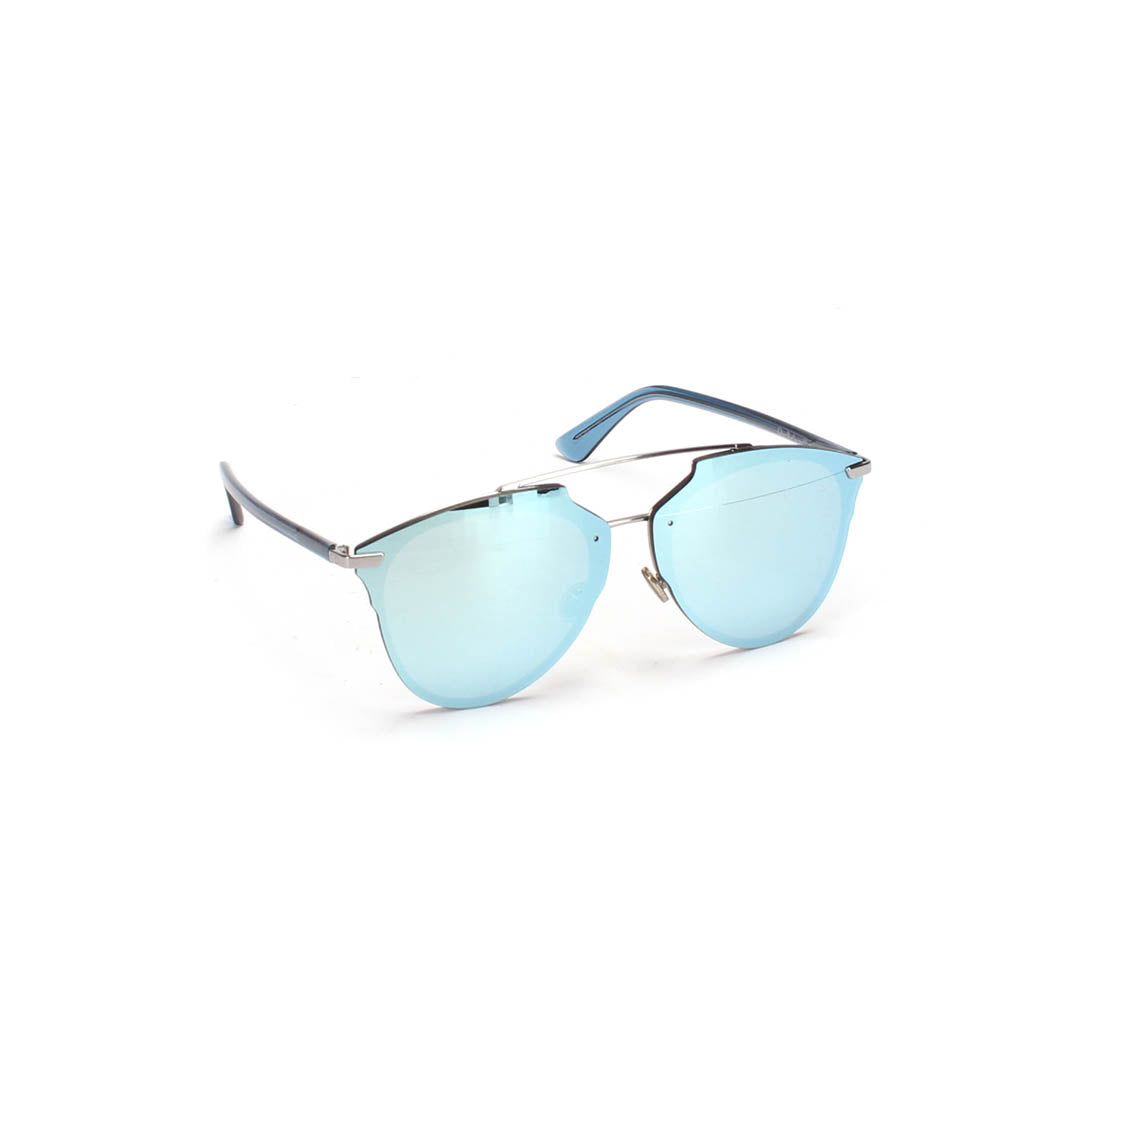 Dior Reflected P Aviator Sunglasses